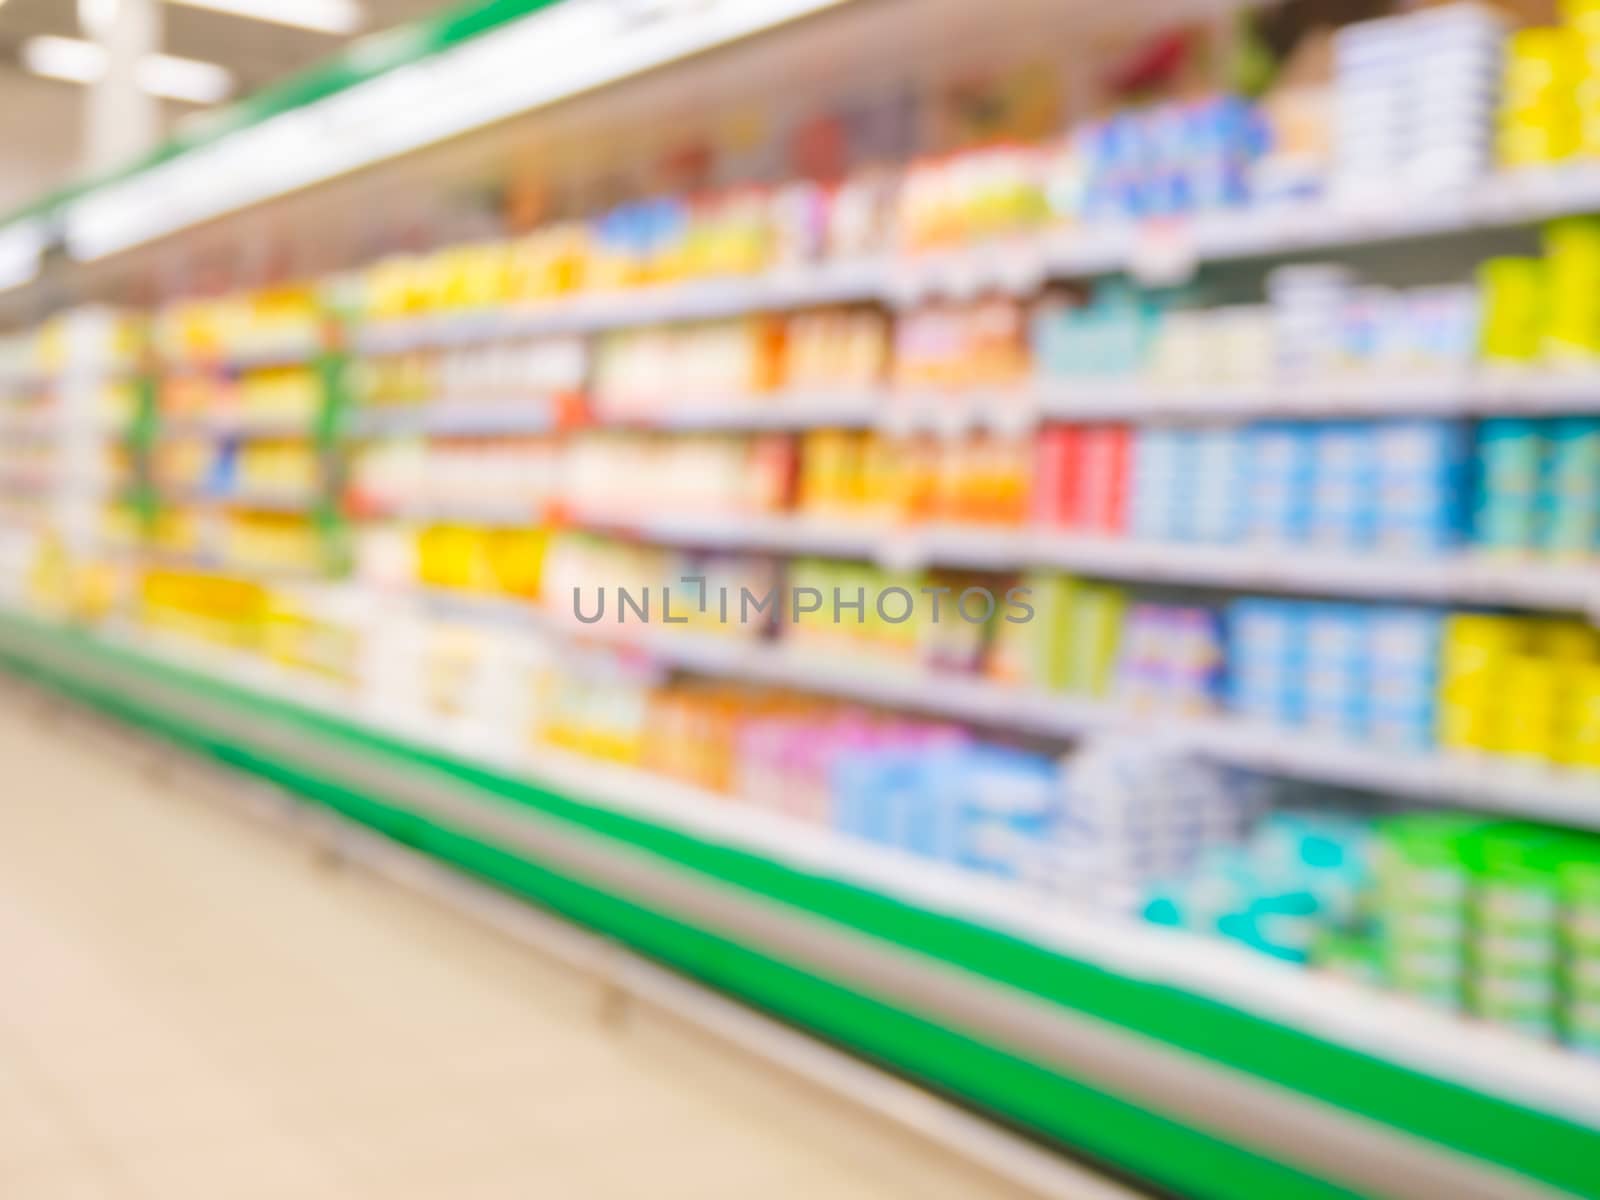 Defocused blur of supermarket shelves by fascinadora